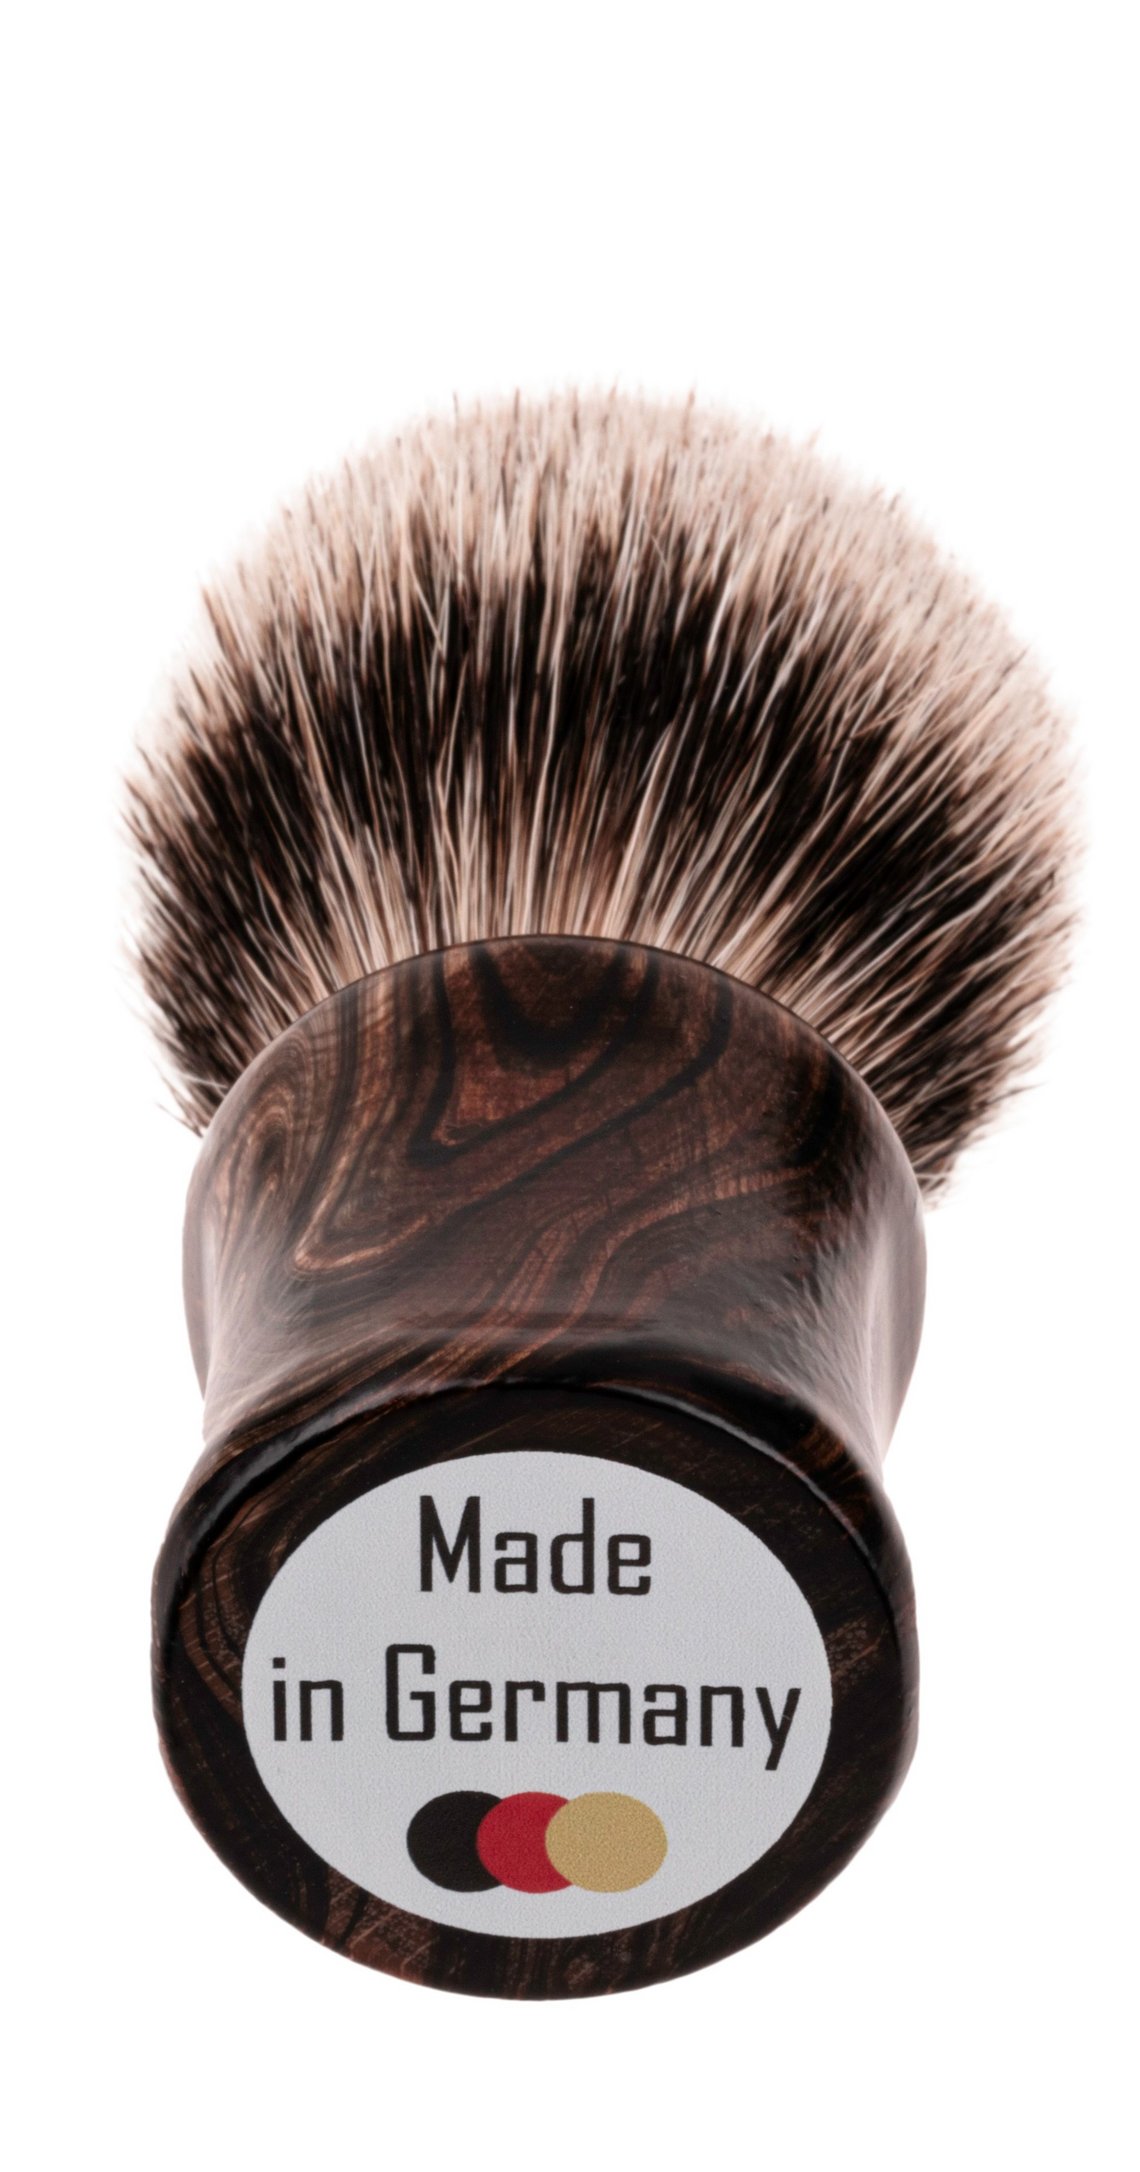 Shaving brush made in Germany imprint